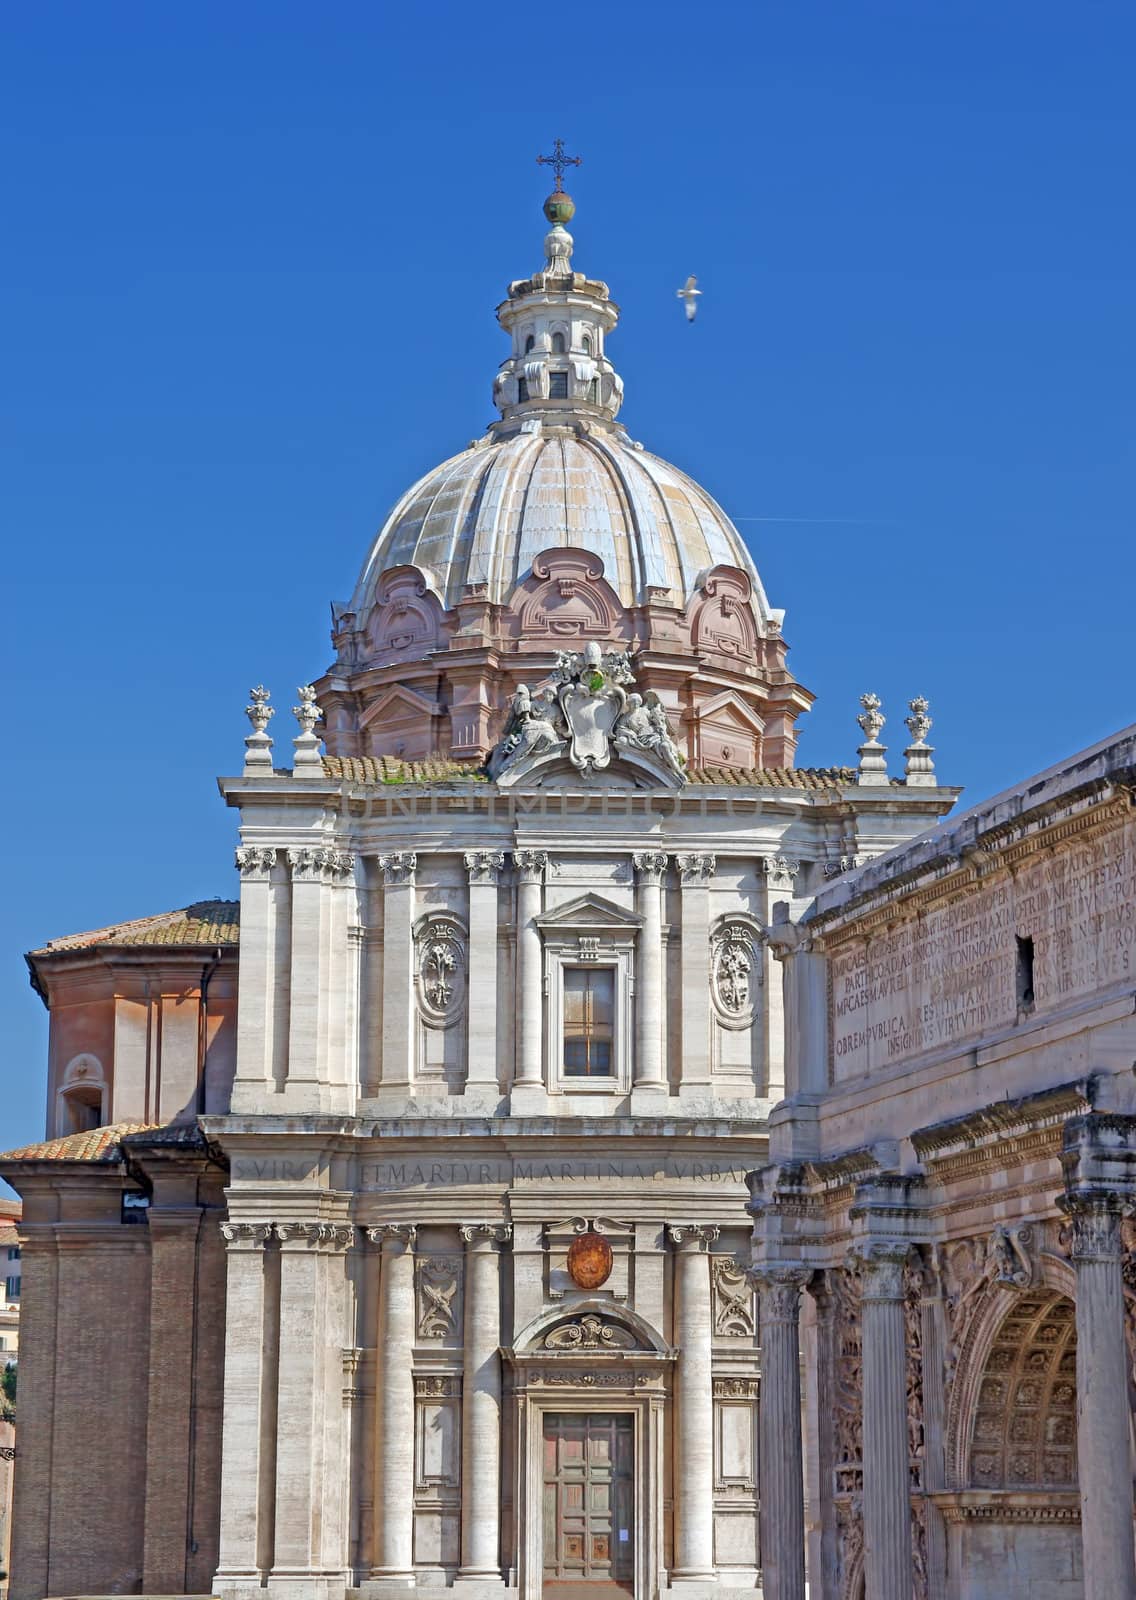 The Church of Santi Luca e Martina and Arch of Septimiu Sever in Rome